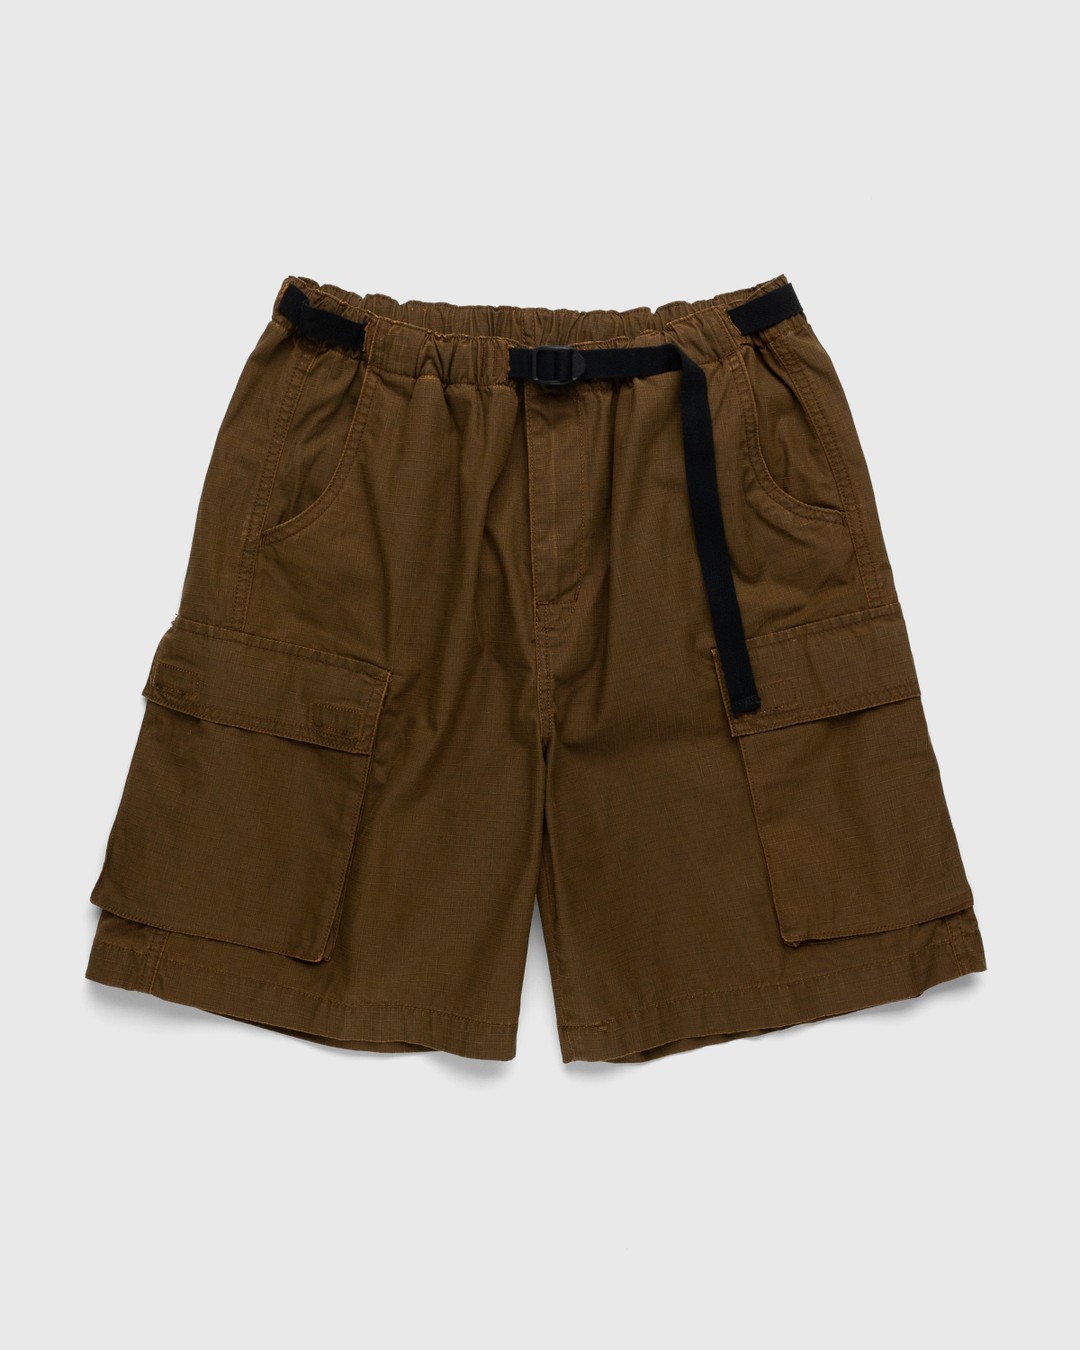 Carhartt WIP – Wynton Short Hamilton Brown - Cargo Shorts - Brown - Image 1